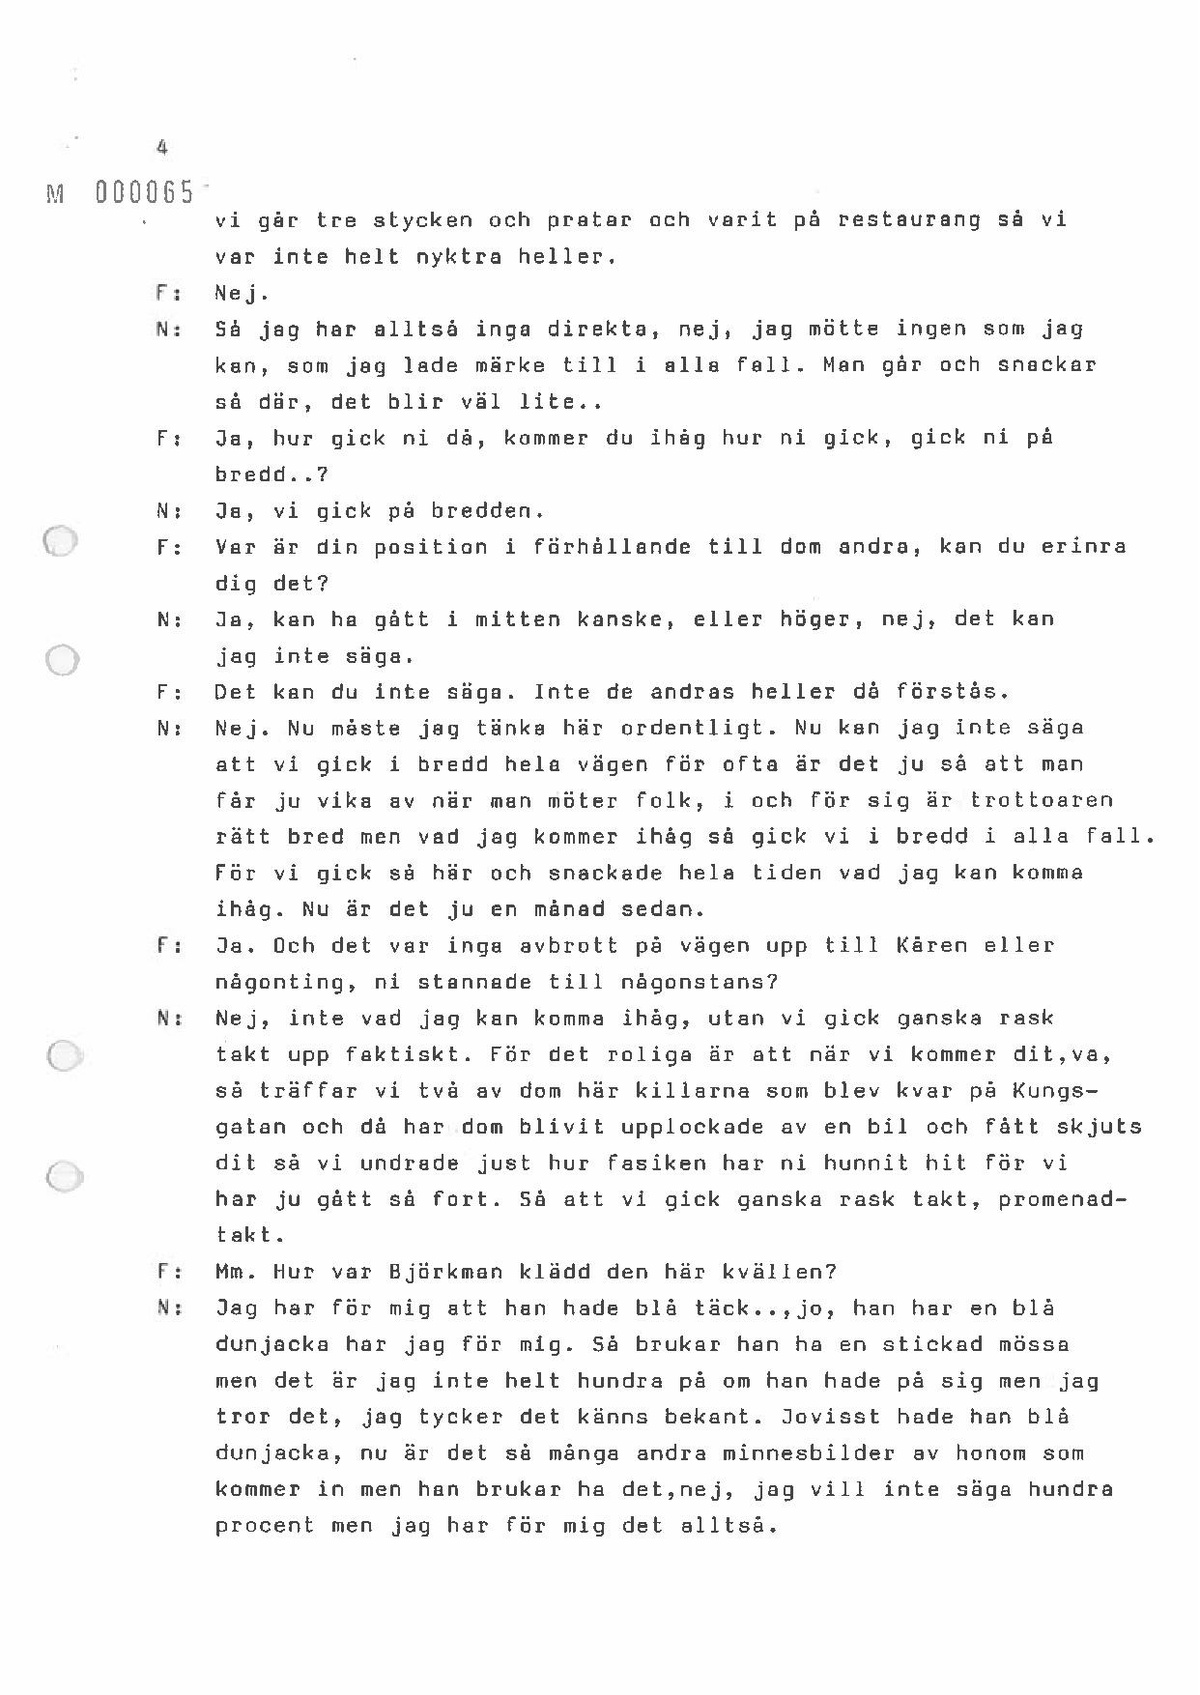 Pol-1986-03-26 1110 E13-07 Claes Nyberg om bankomatuttag Götabanken Sveavägen.pdf